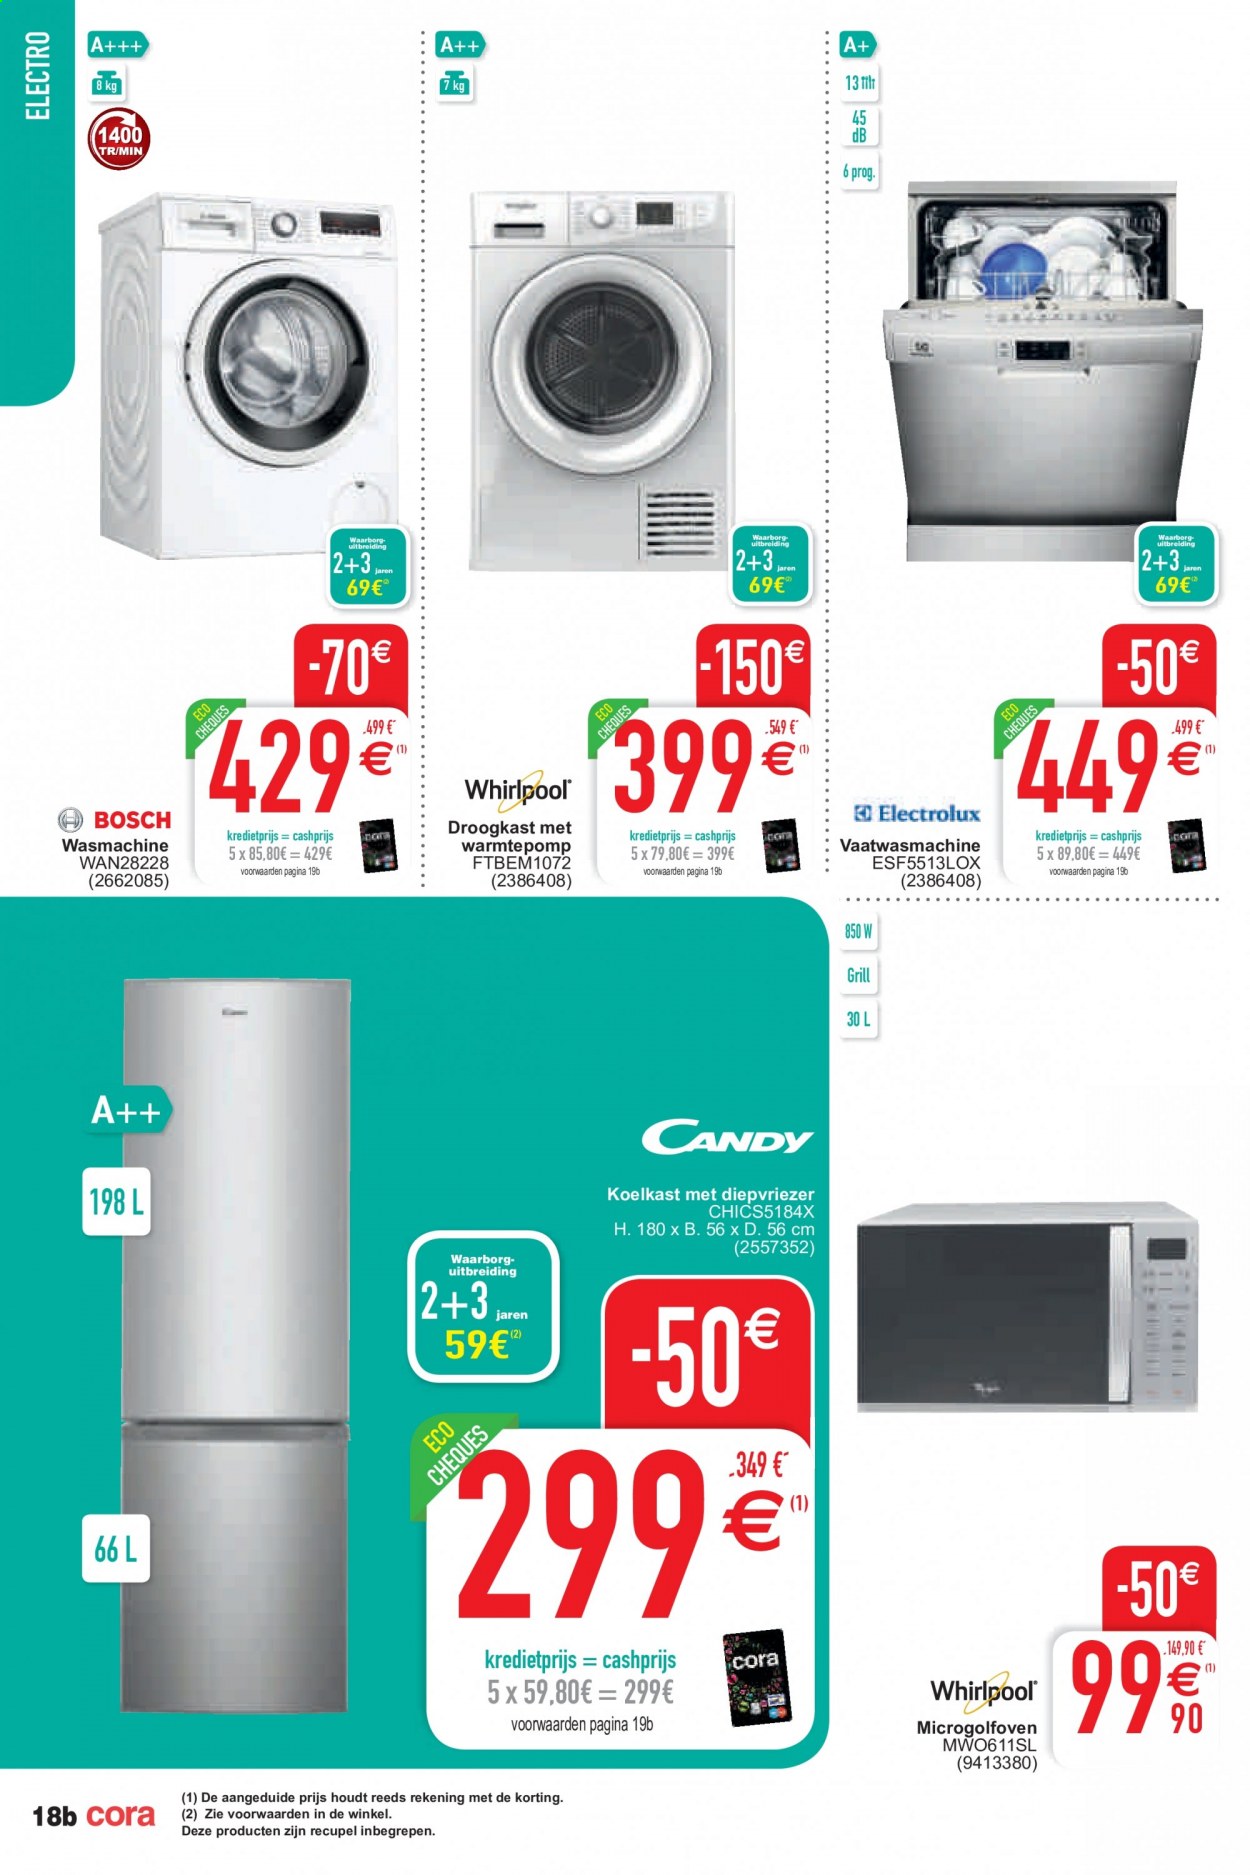 thumbnail - Cora-aanbieding - 16/02/2021 - 01/03/2021 -  producten in de aanbieding - wasmachine, grill, koelkast. Pagina 18.